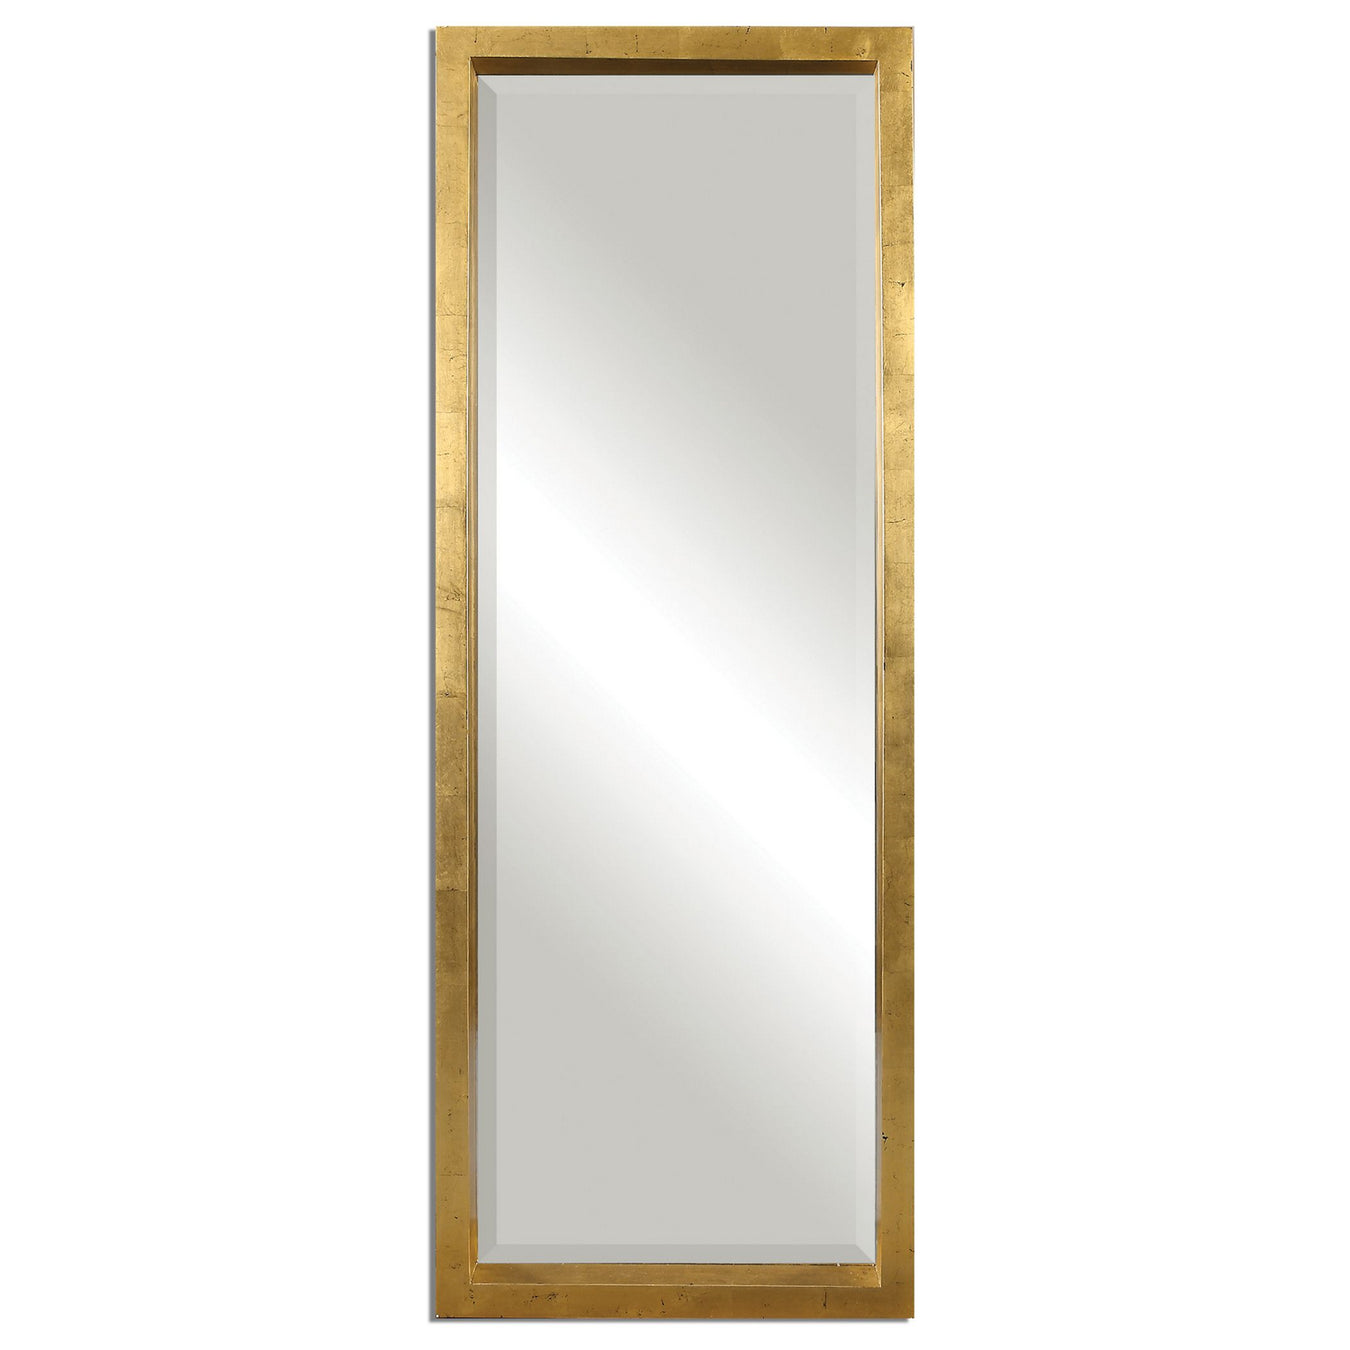 Uttermost's Edmonton Gold Leaner Mirror Designed by Grace Feyock